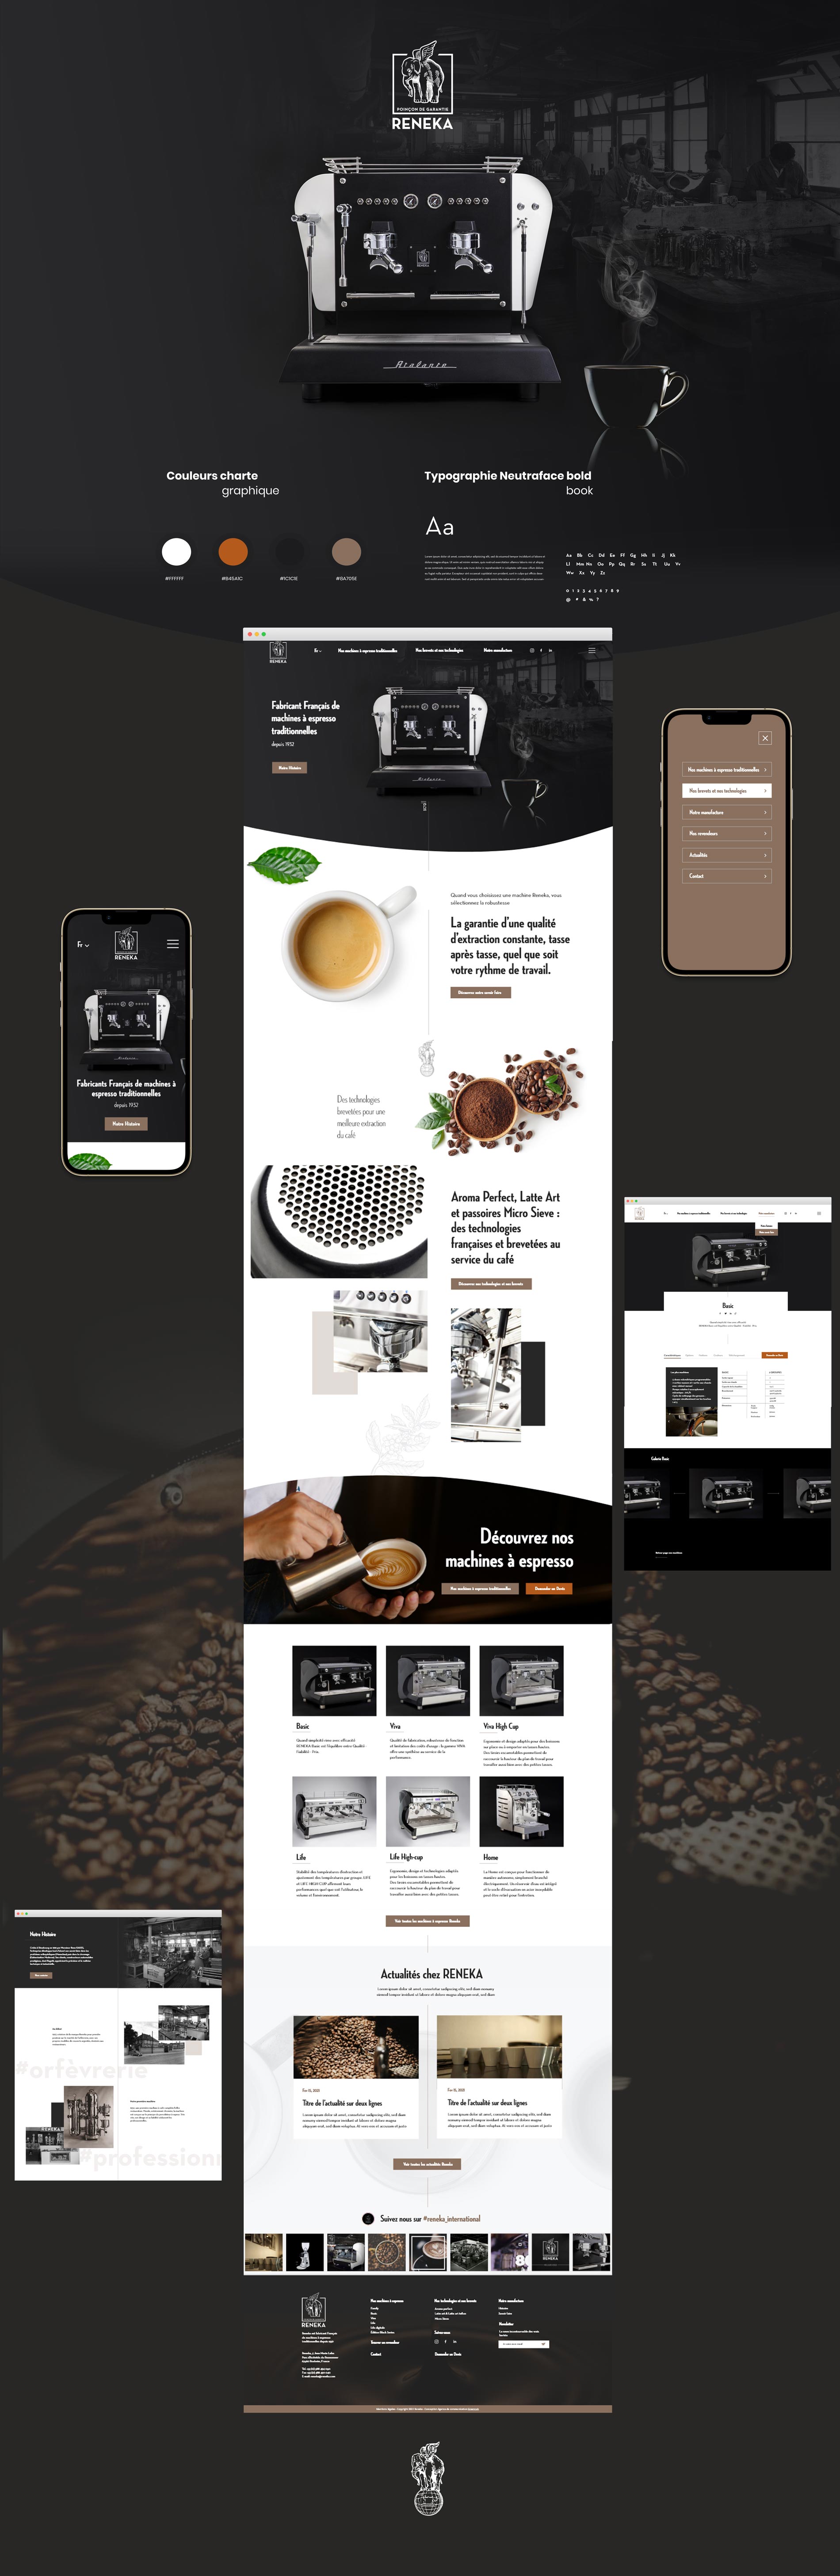 reneka, machine espresso web design